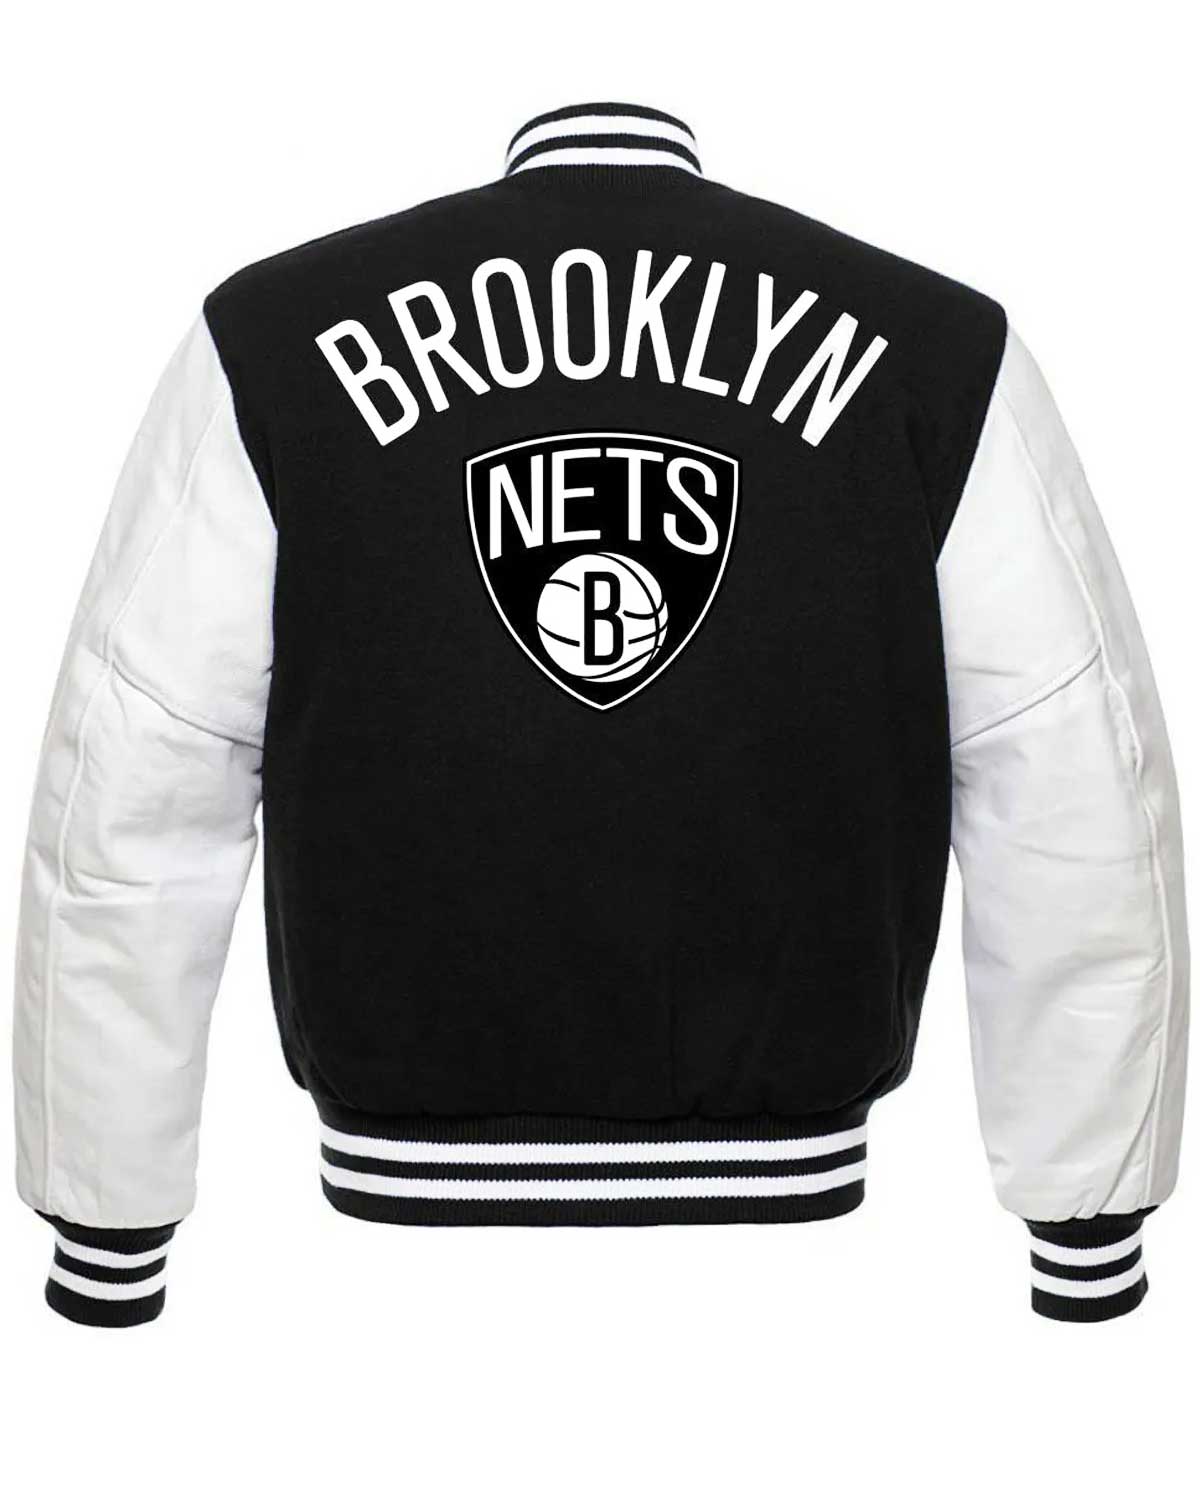 Brooklyn Nets NBA Letterman Black And White Jacket | Elite Jacket